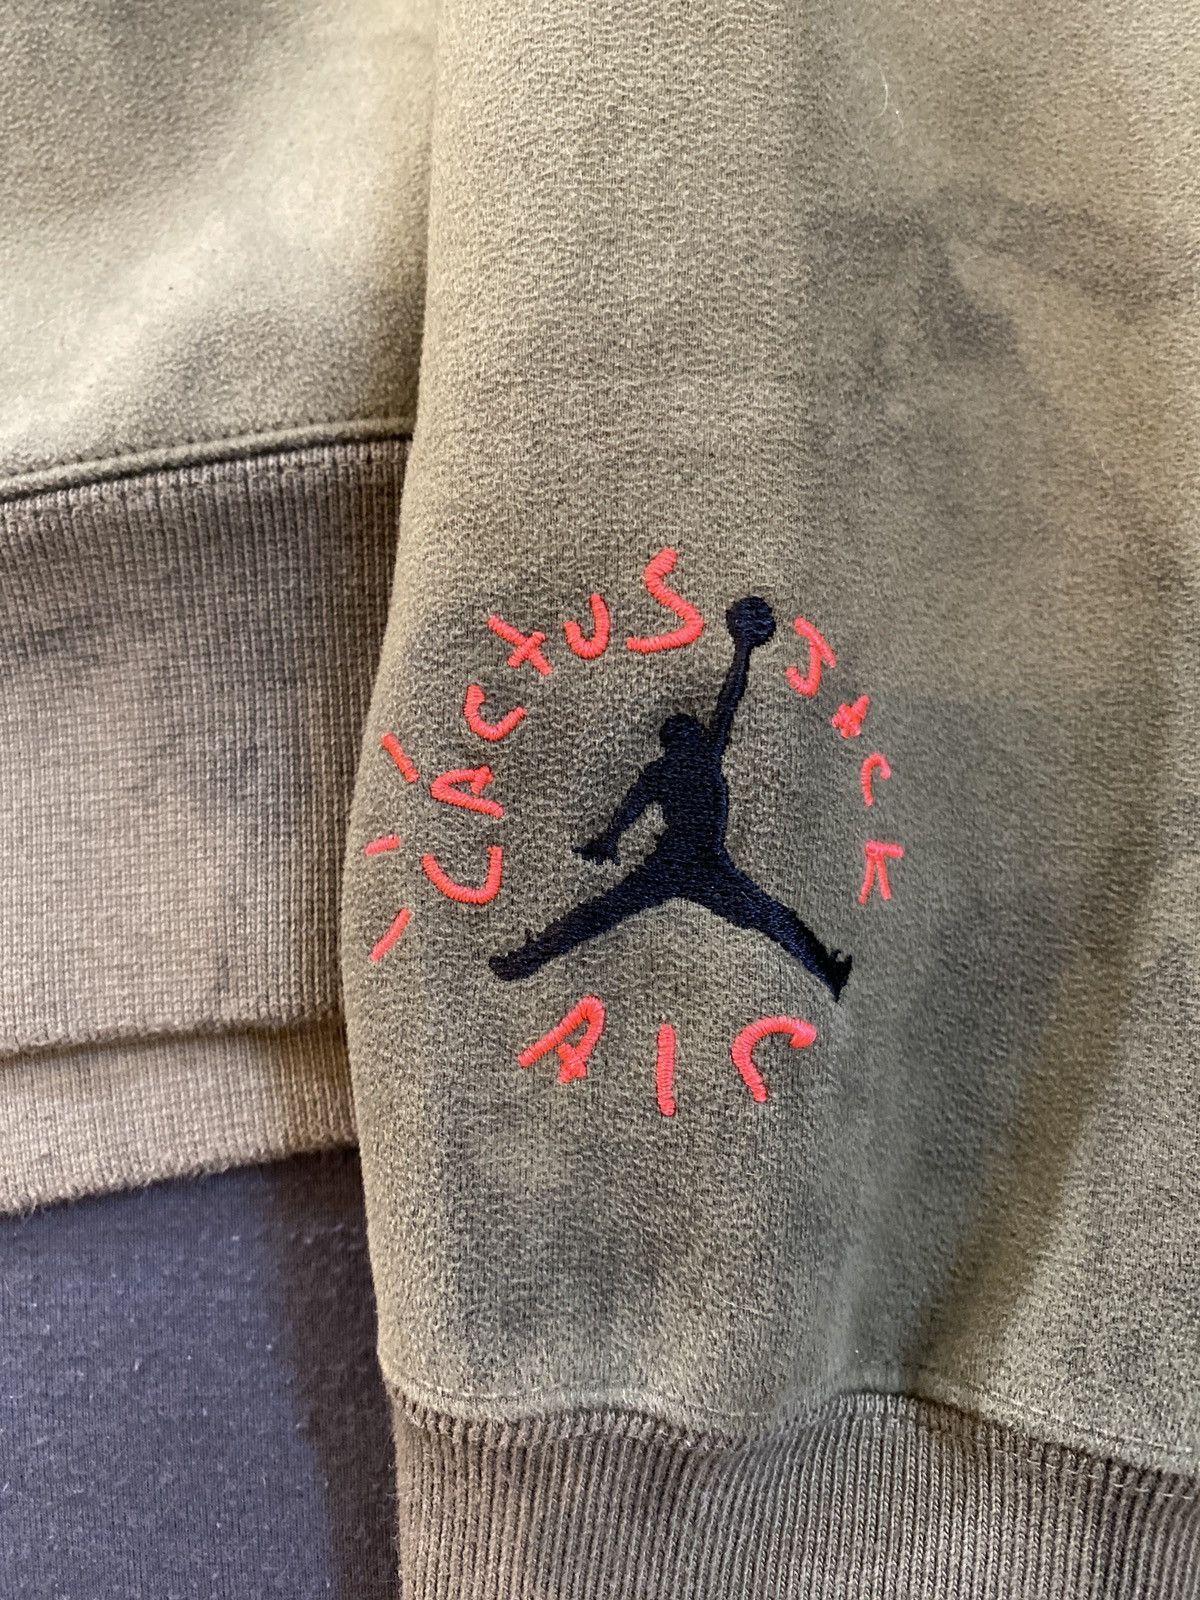 Nike Jordan Travis Scott hoodie in army green Size US M / EU 48-50 / 2 - 2 Preview